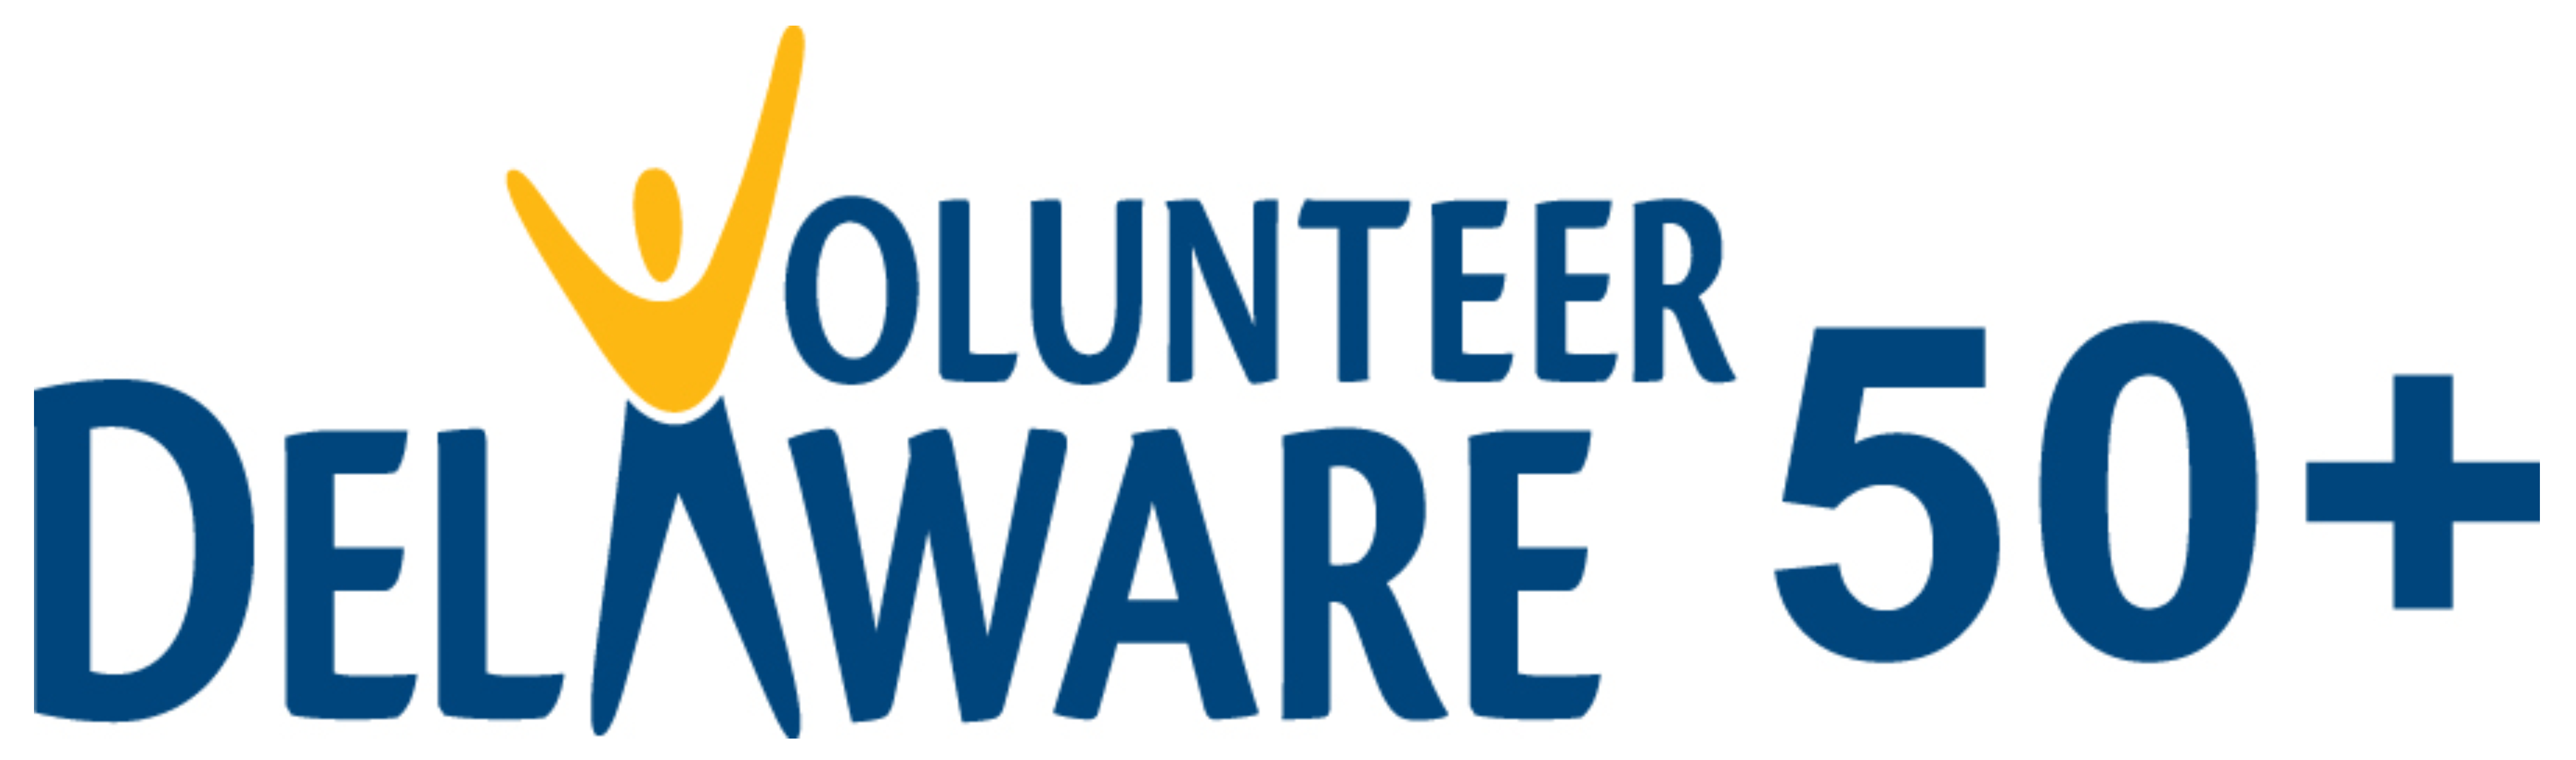 Volunteer Delaware Partner Volunteer Delaware 50+ (NCC)